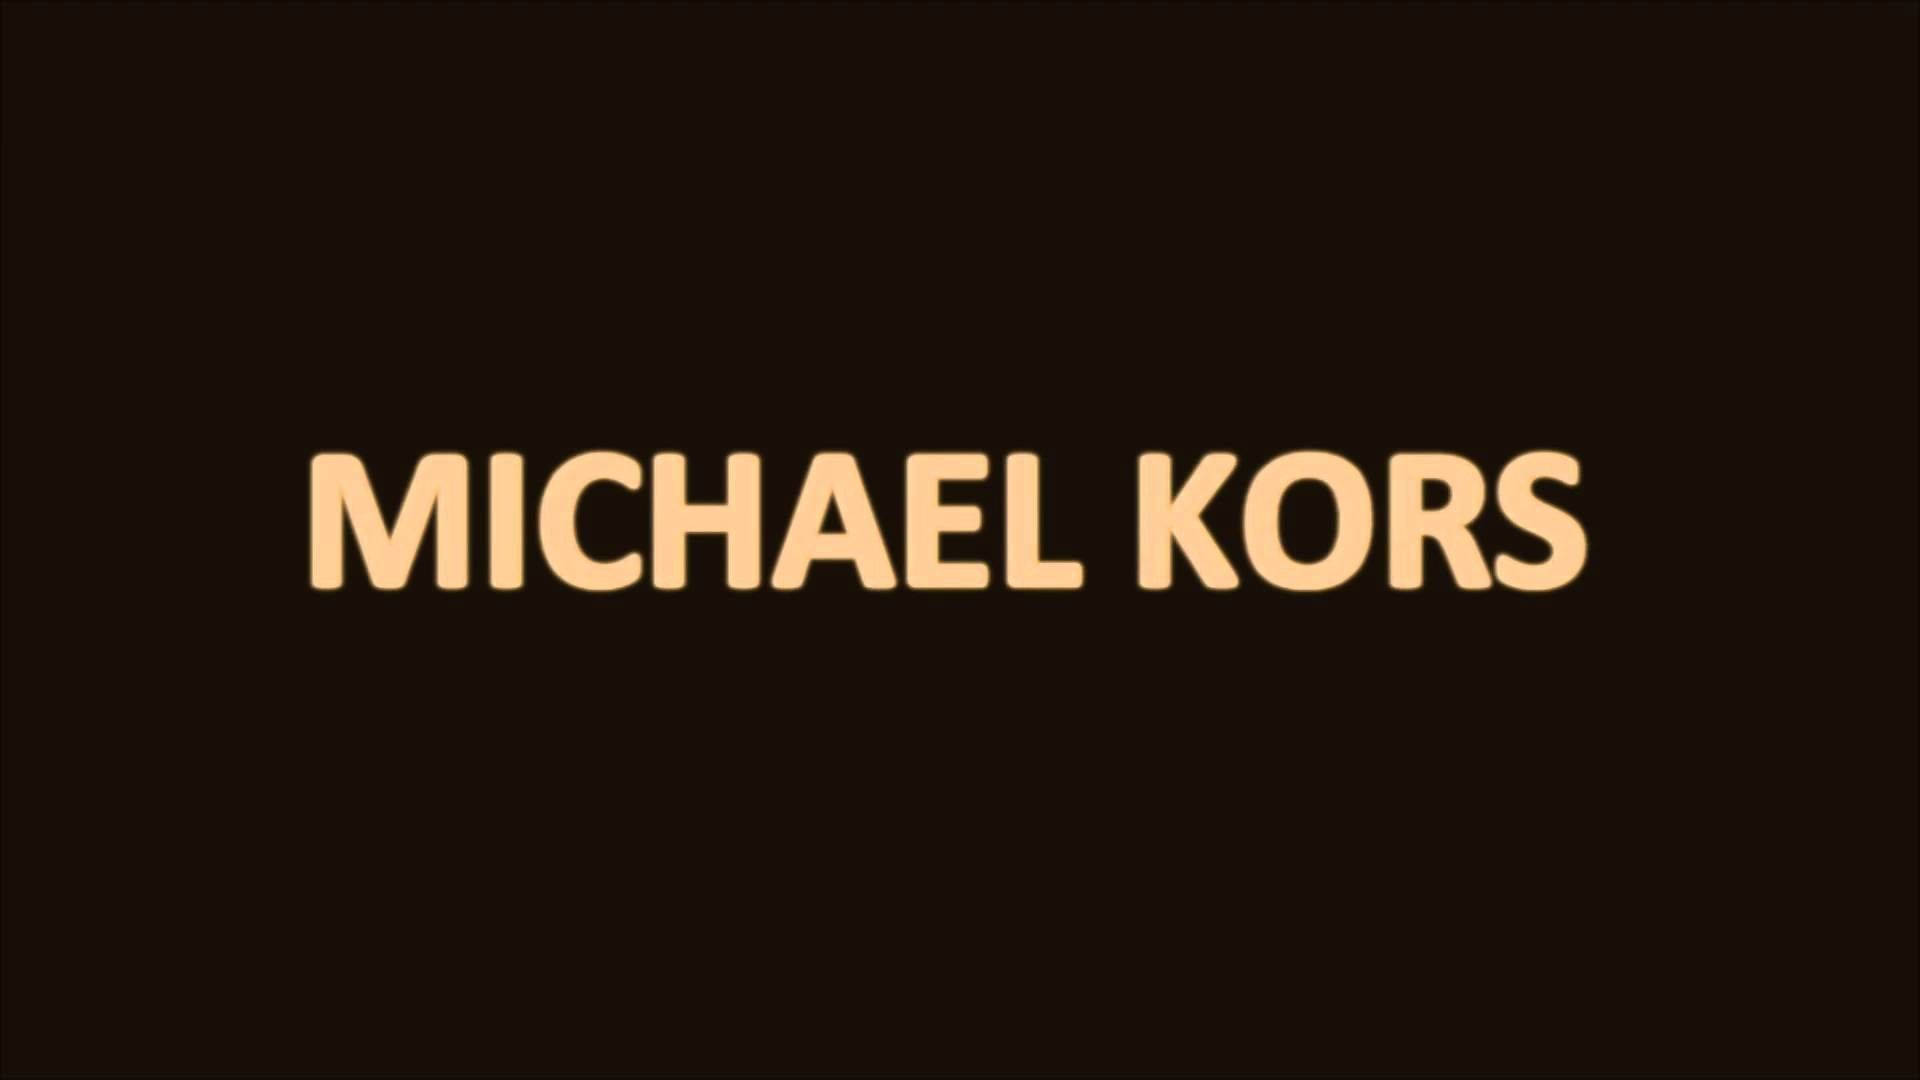 Michael Kors Minimalistic Poster Background